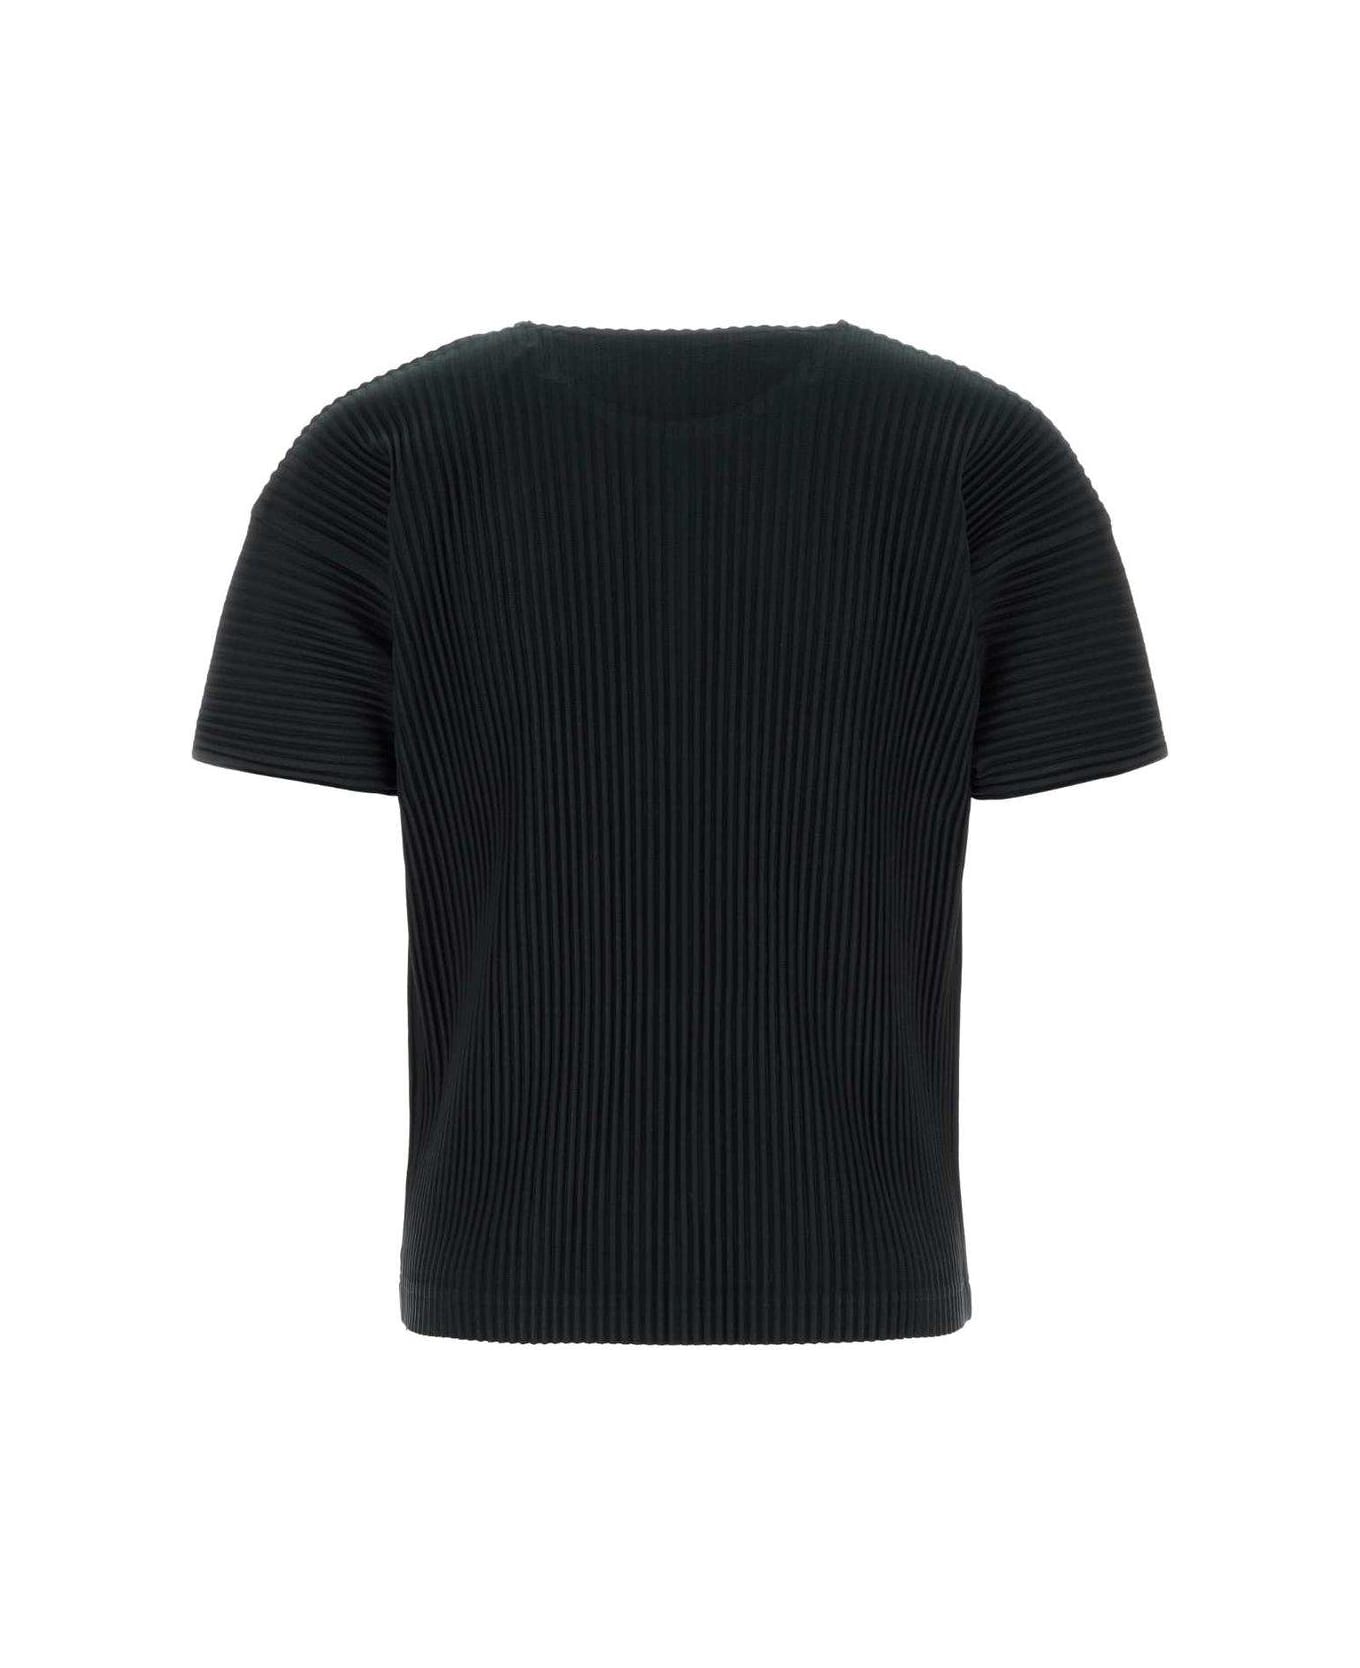 Homme Plissé Issey Miyake Crewneck Short-sleeved T-shirt - Black